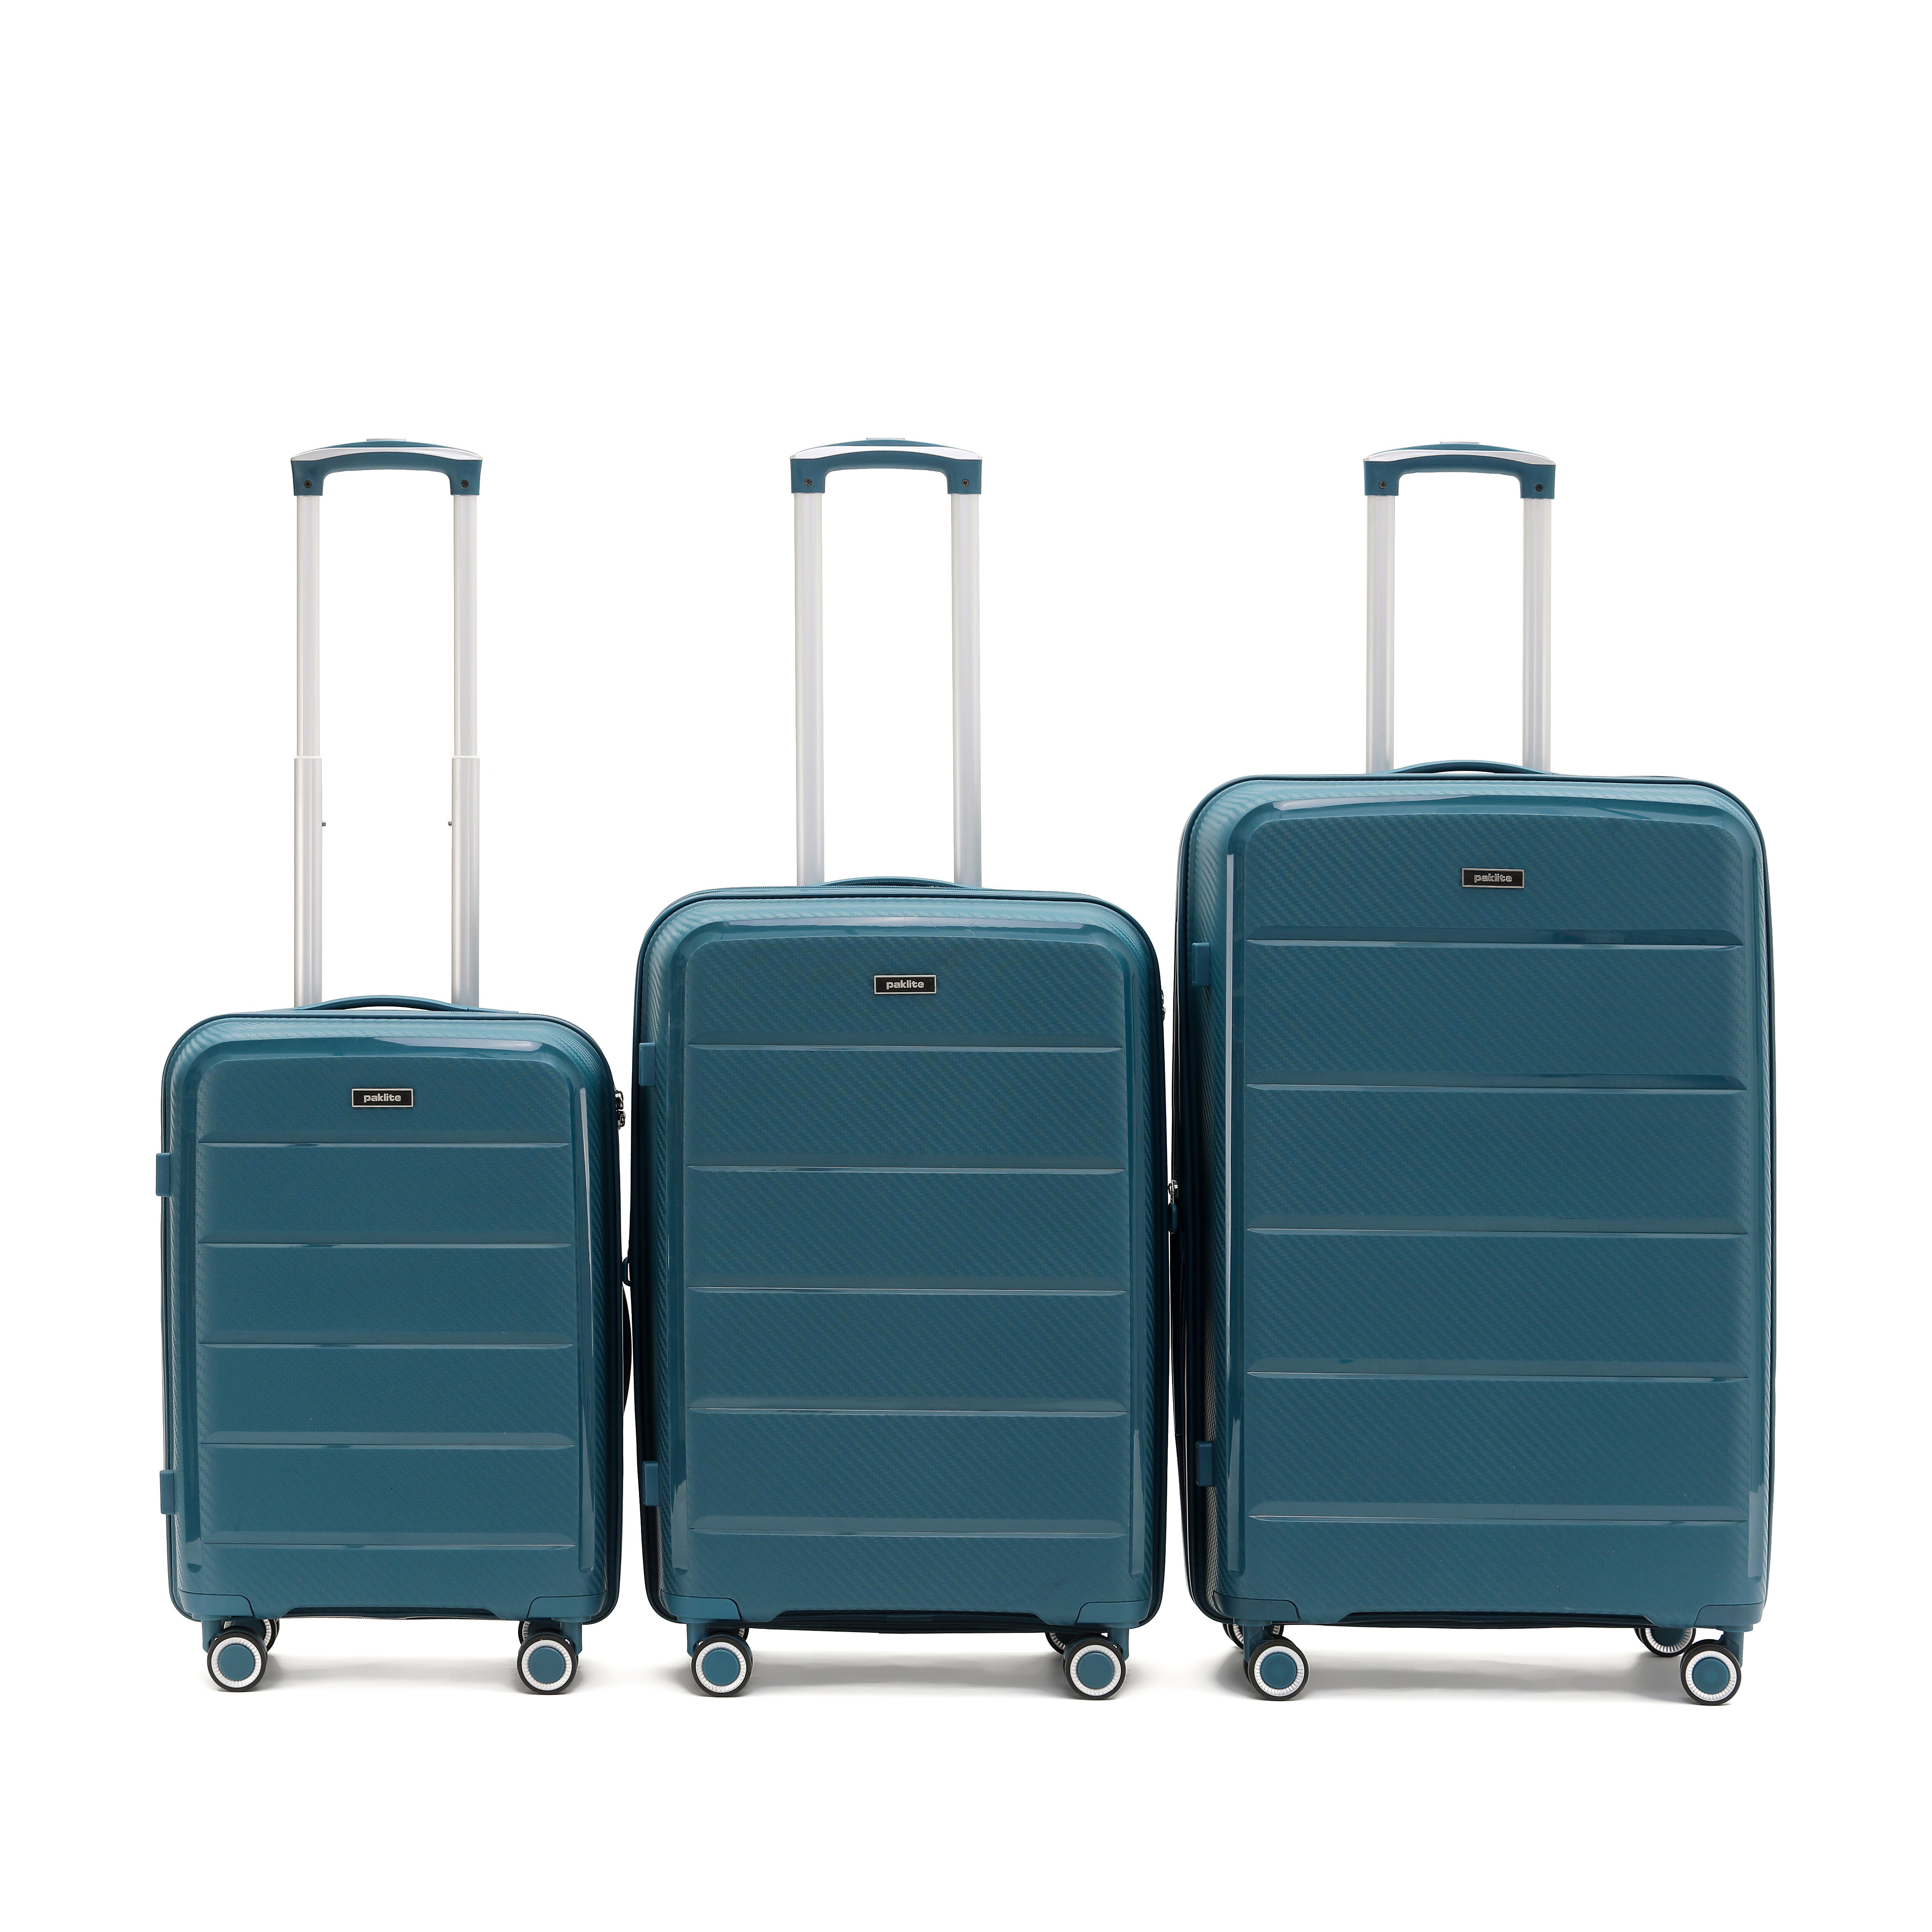 Paklite - PA7350 Set of 3 Suitcases - Blue